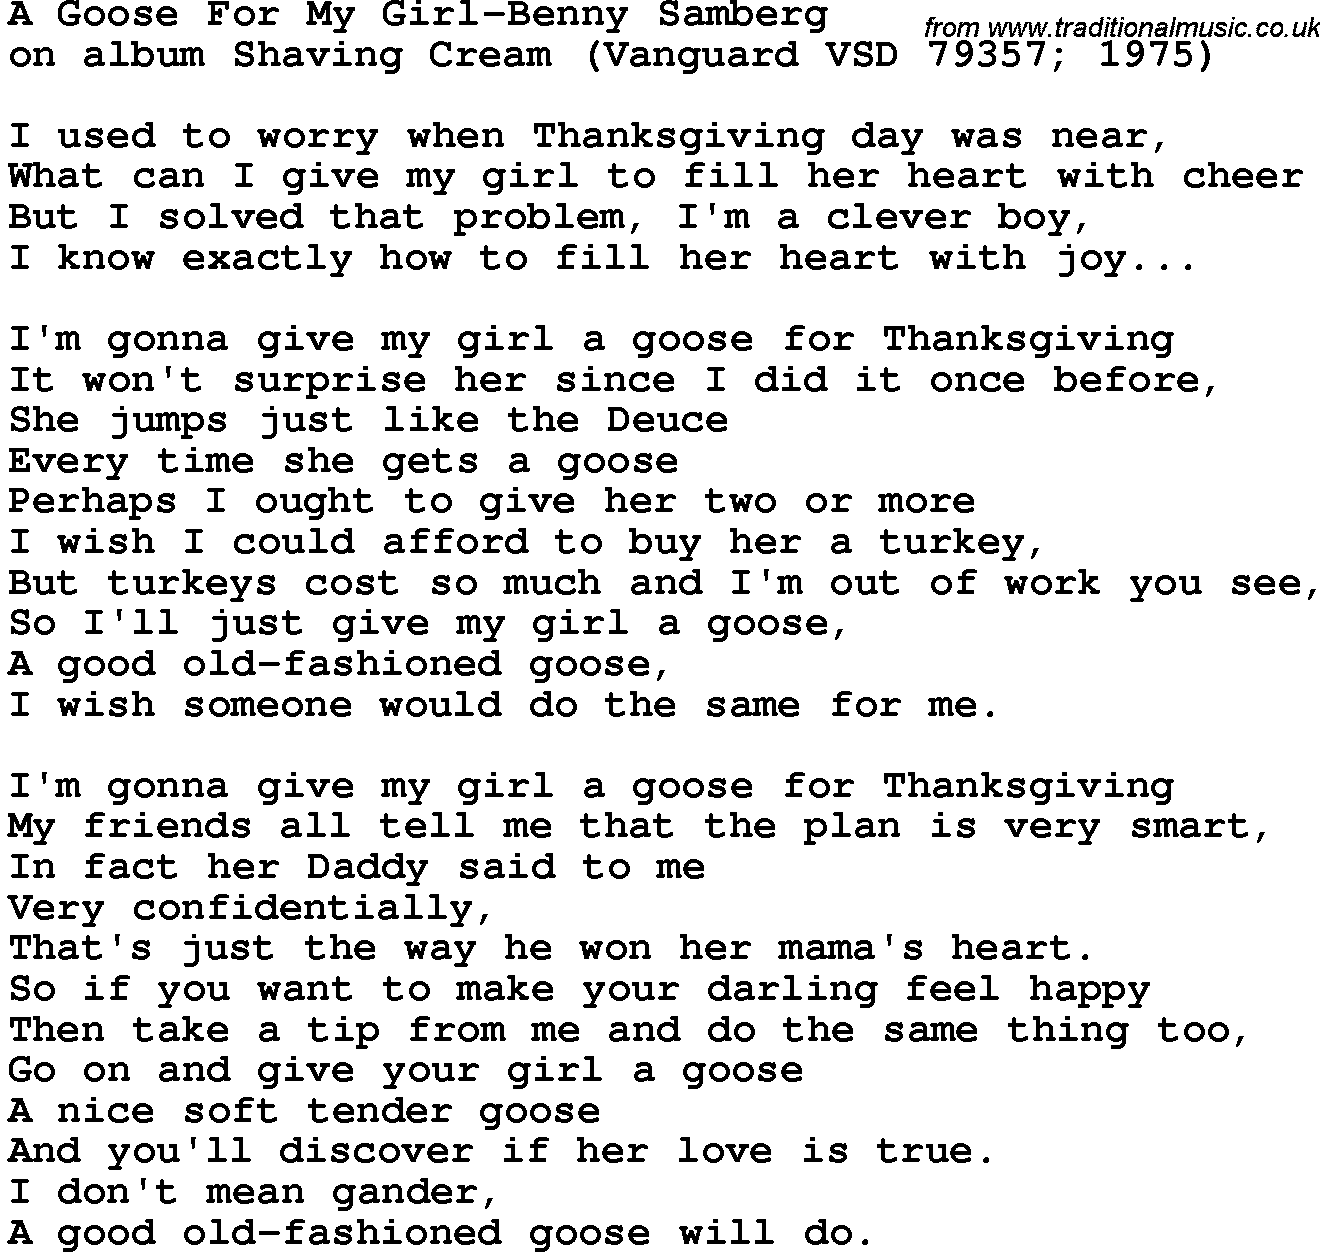 Novelty song: A Goose For My Girl-Benny Samberg lyrics